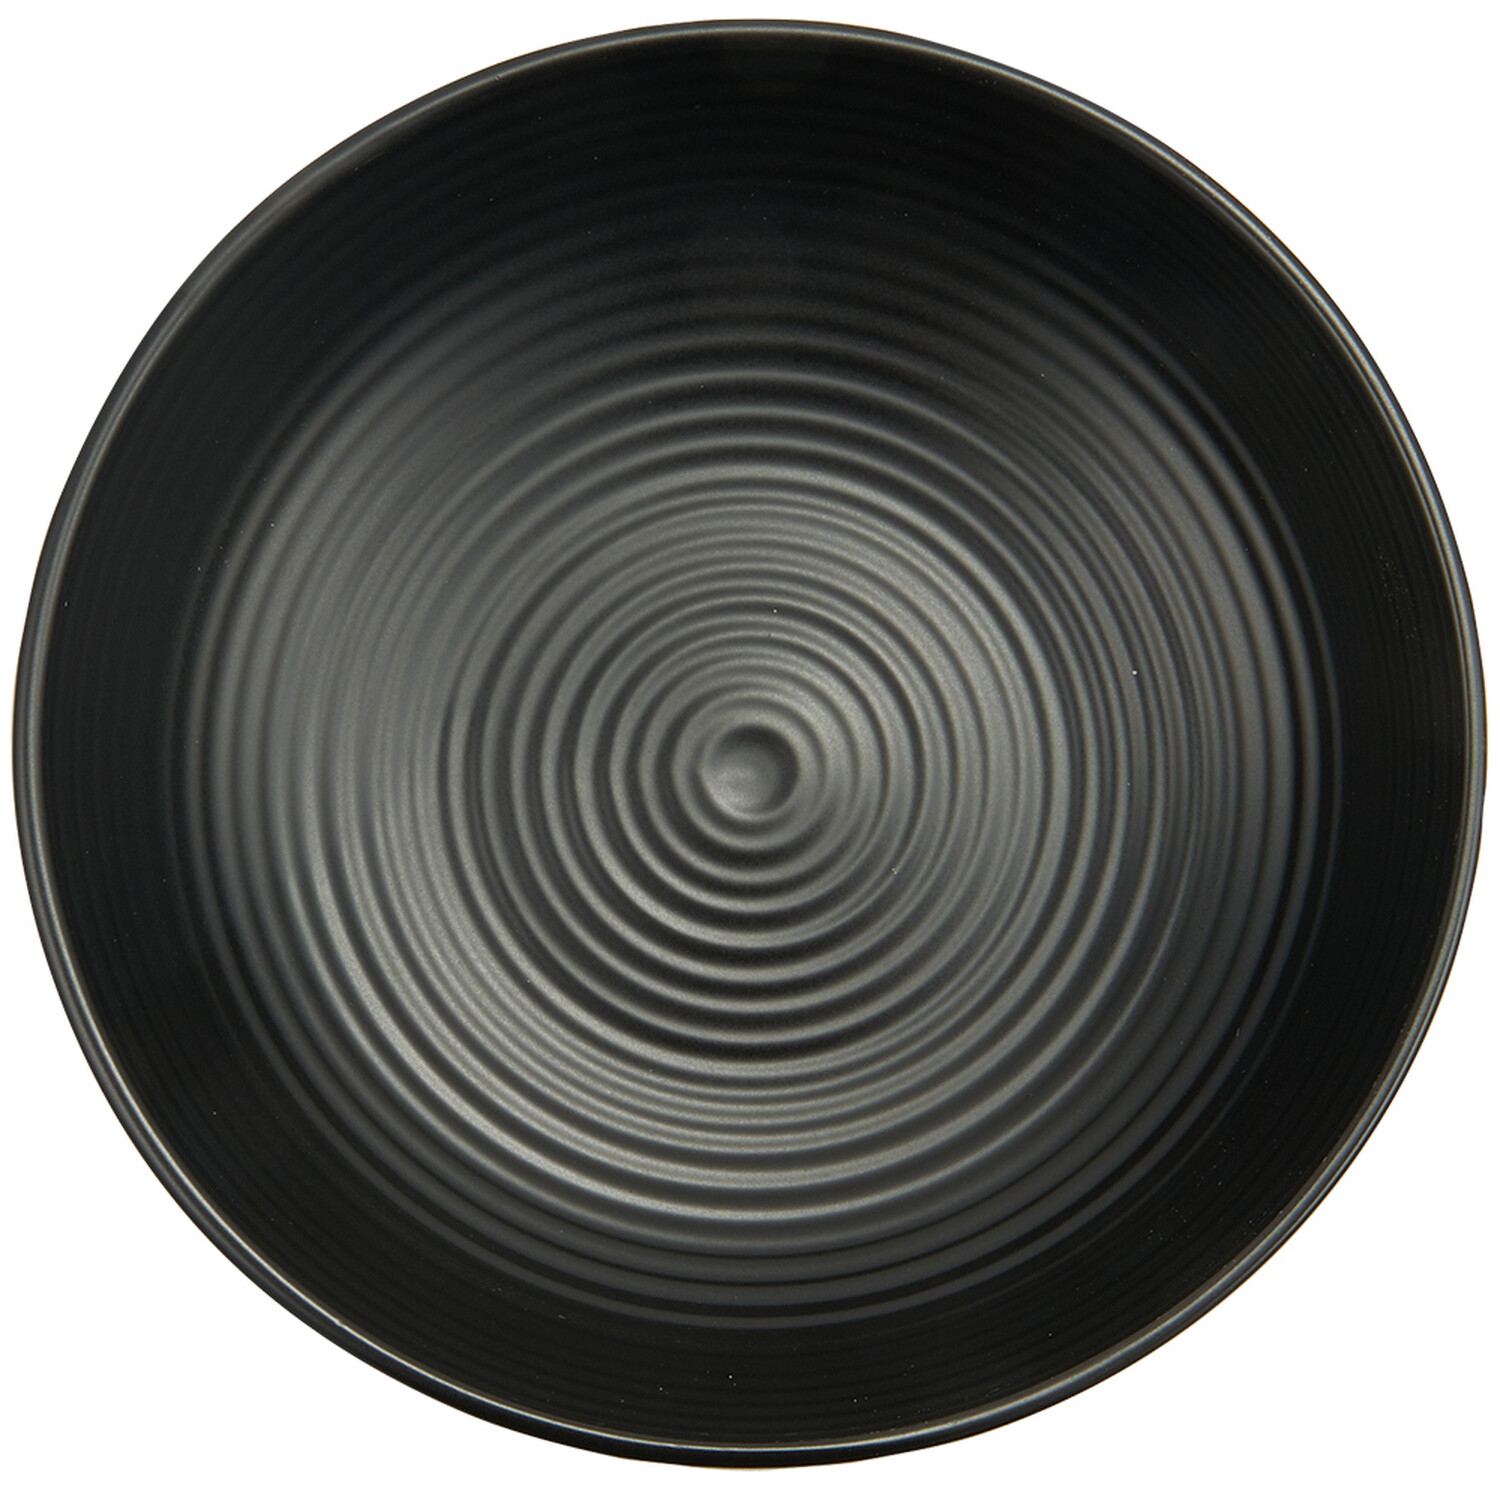 Nera 24cm Black Ribbed Serving Bowl Image 2